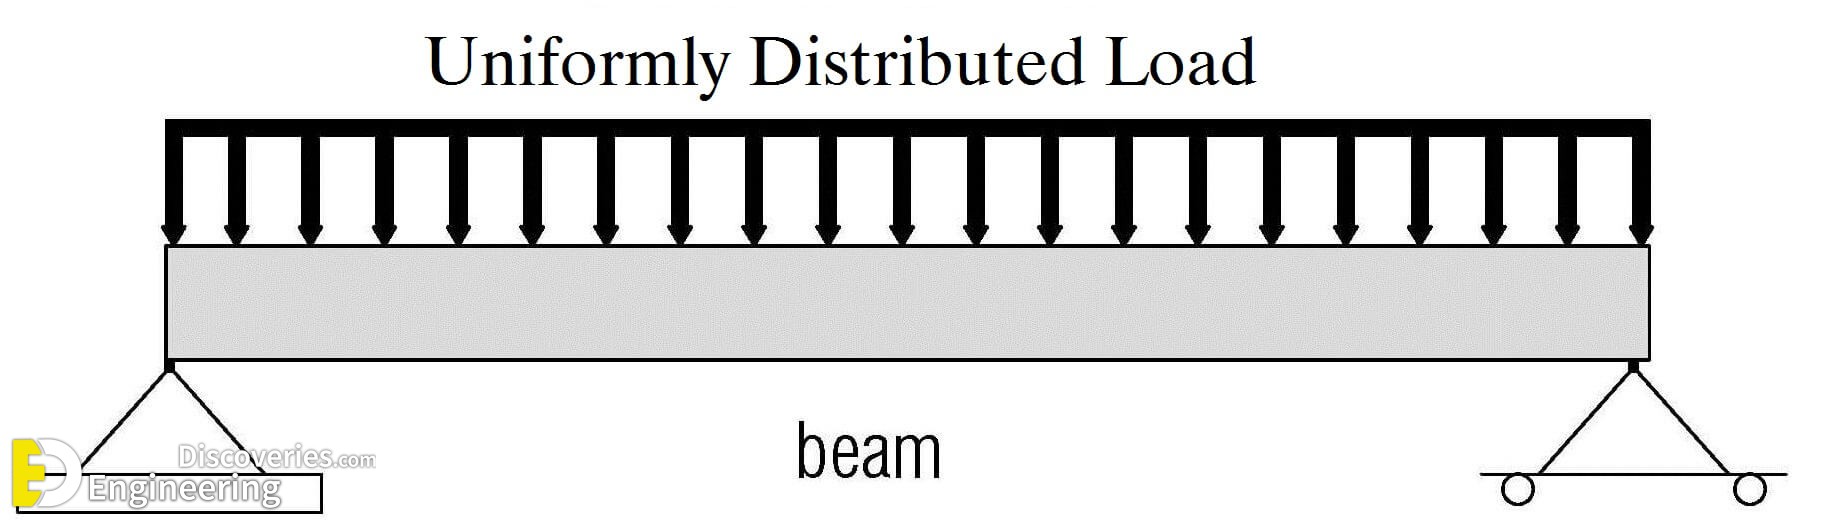 Load example. Uniform load distribution. CID distributed load vs distributed load Шимкович.